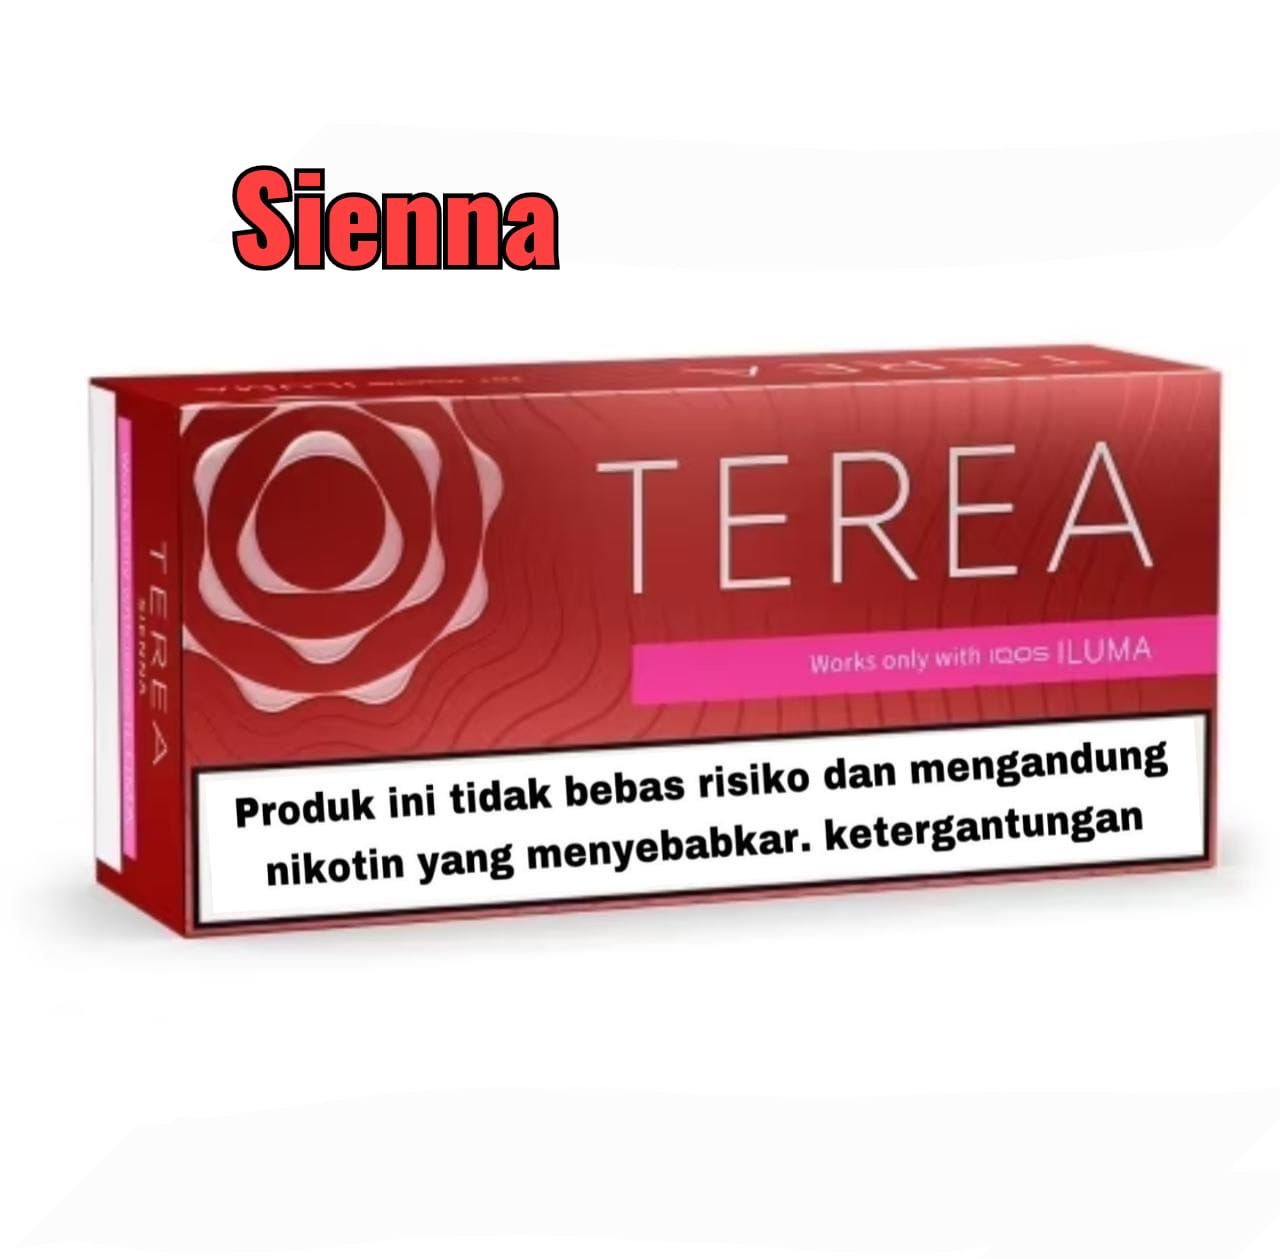 New IQOS Terea Sienna Indonesian